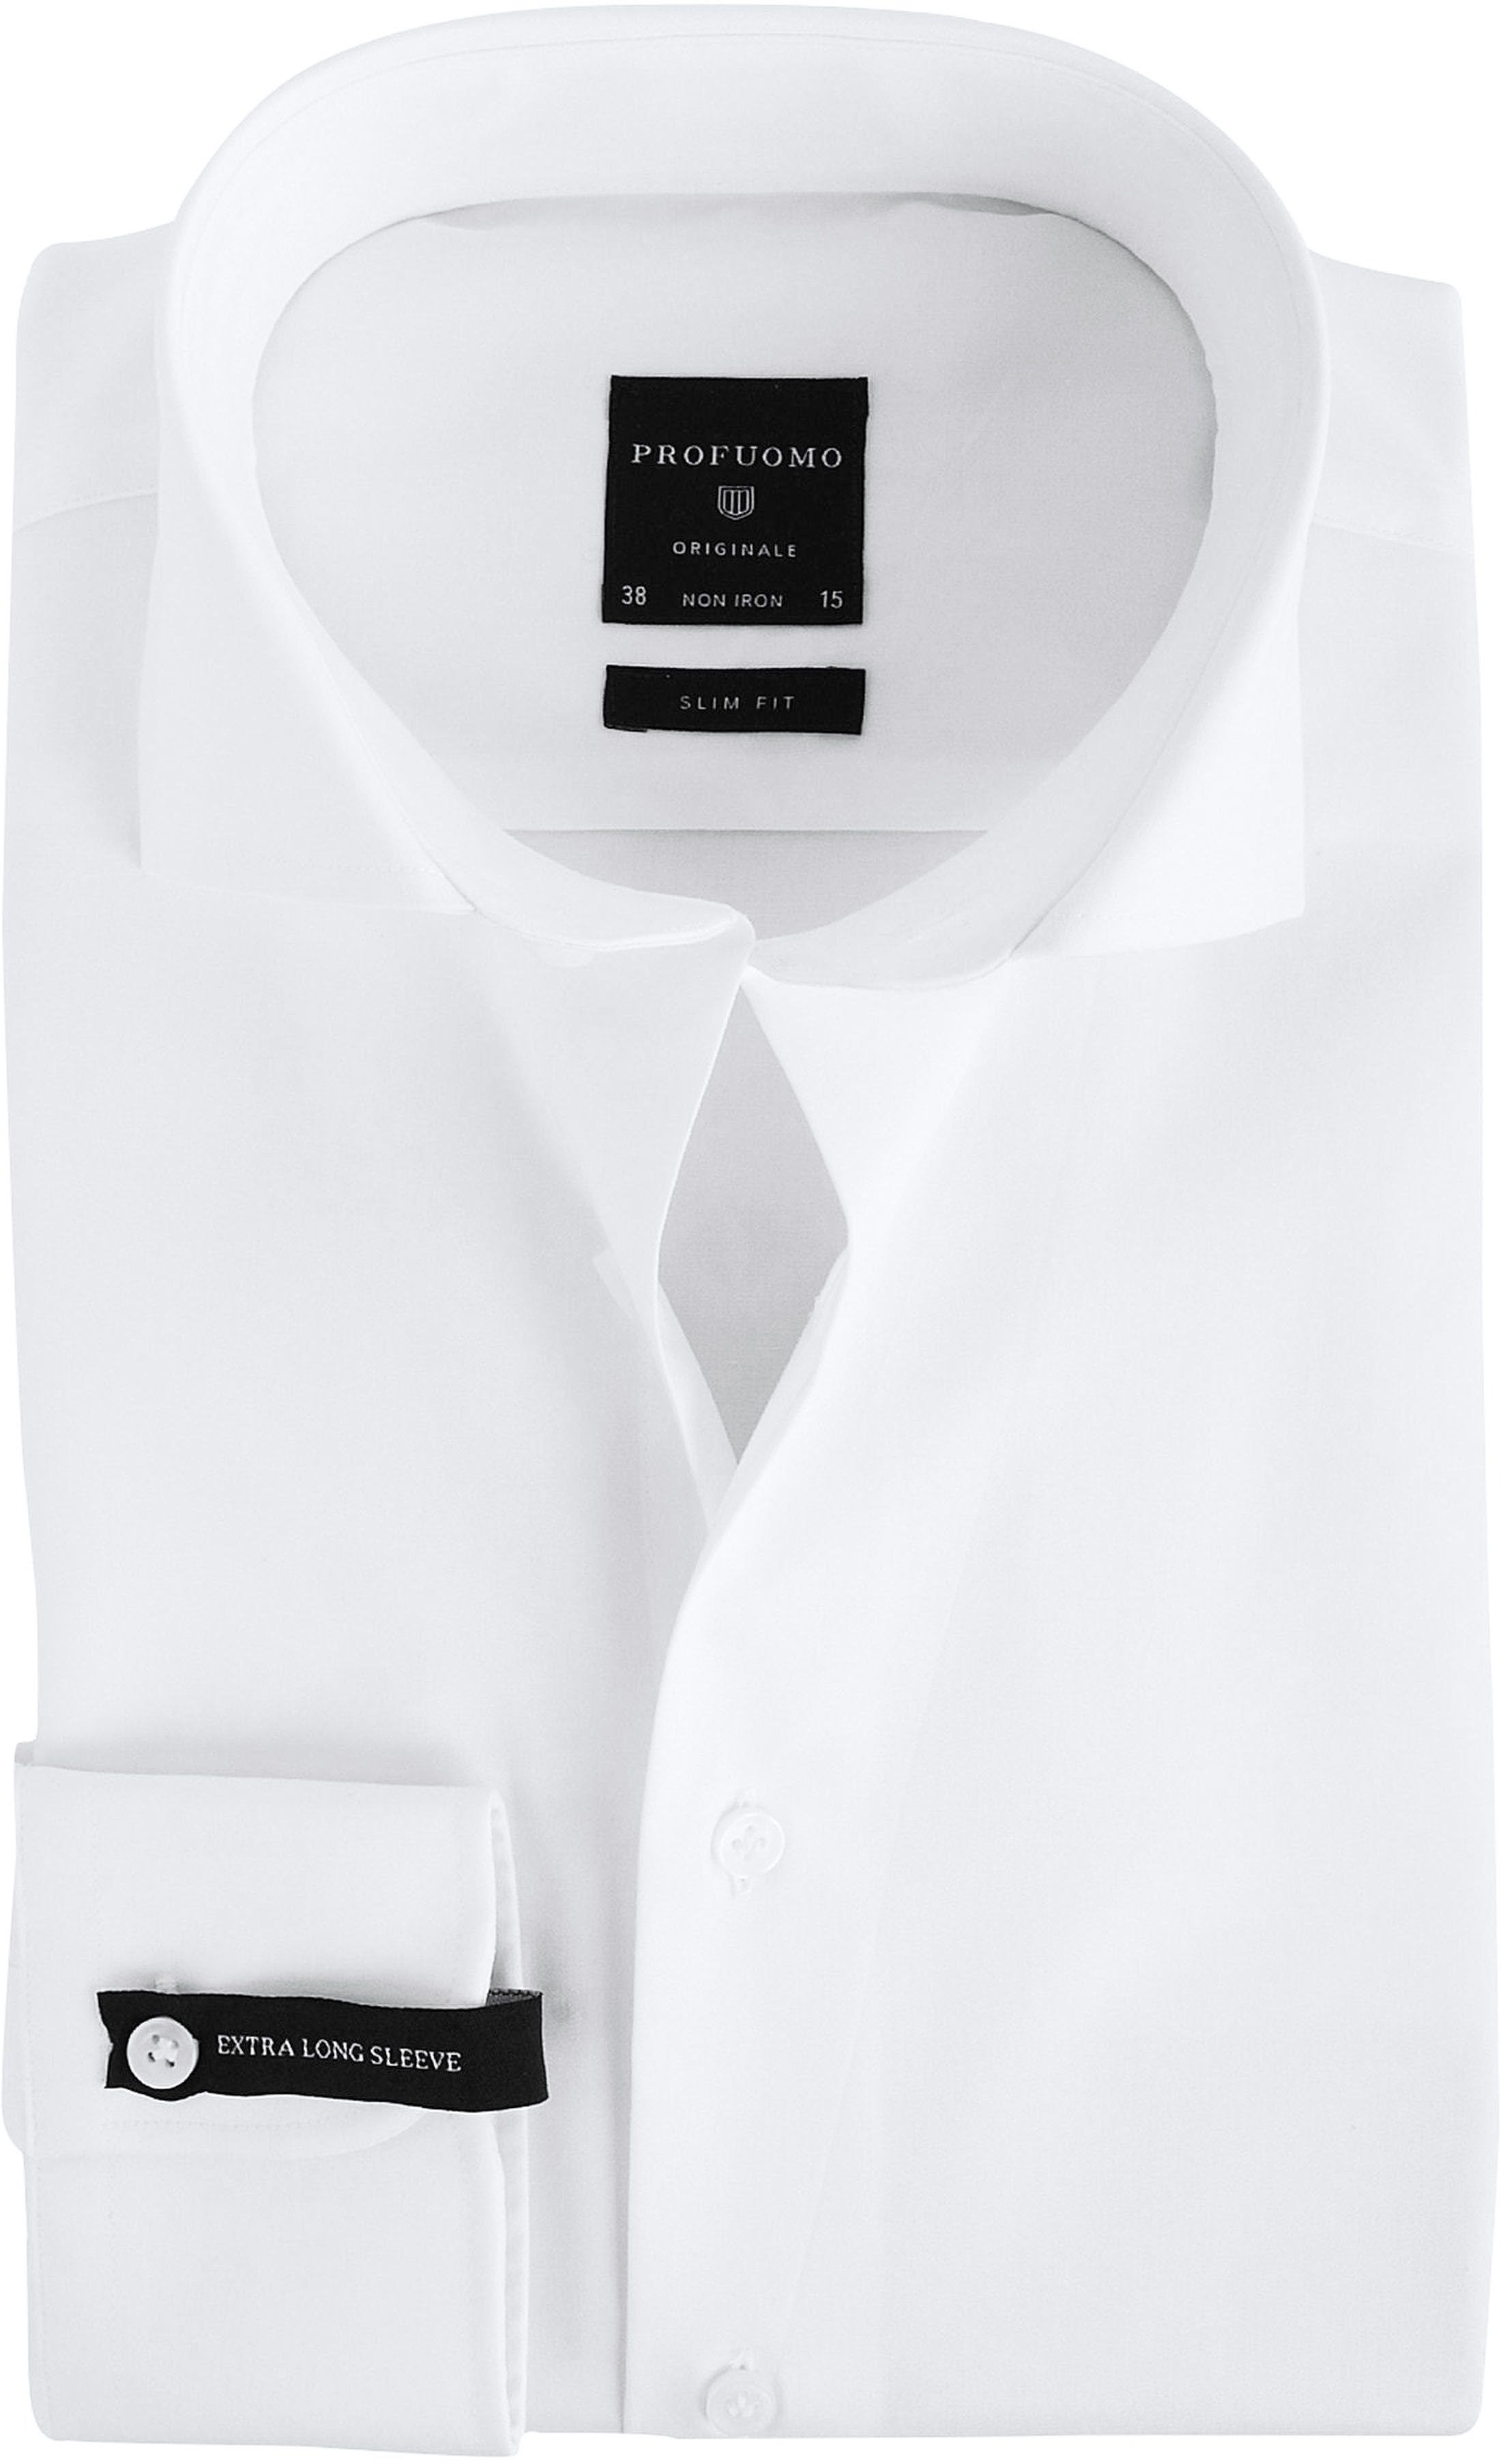 Profuomo Shirt Extra Long Sleeve Cutaway White size 14.5